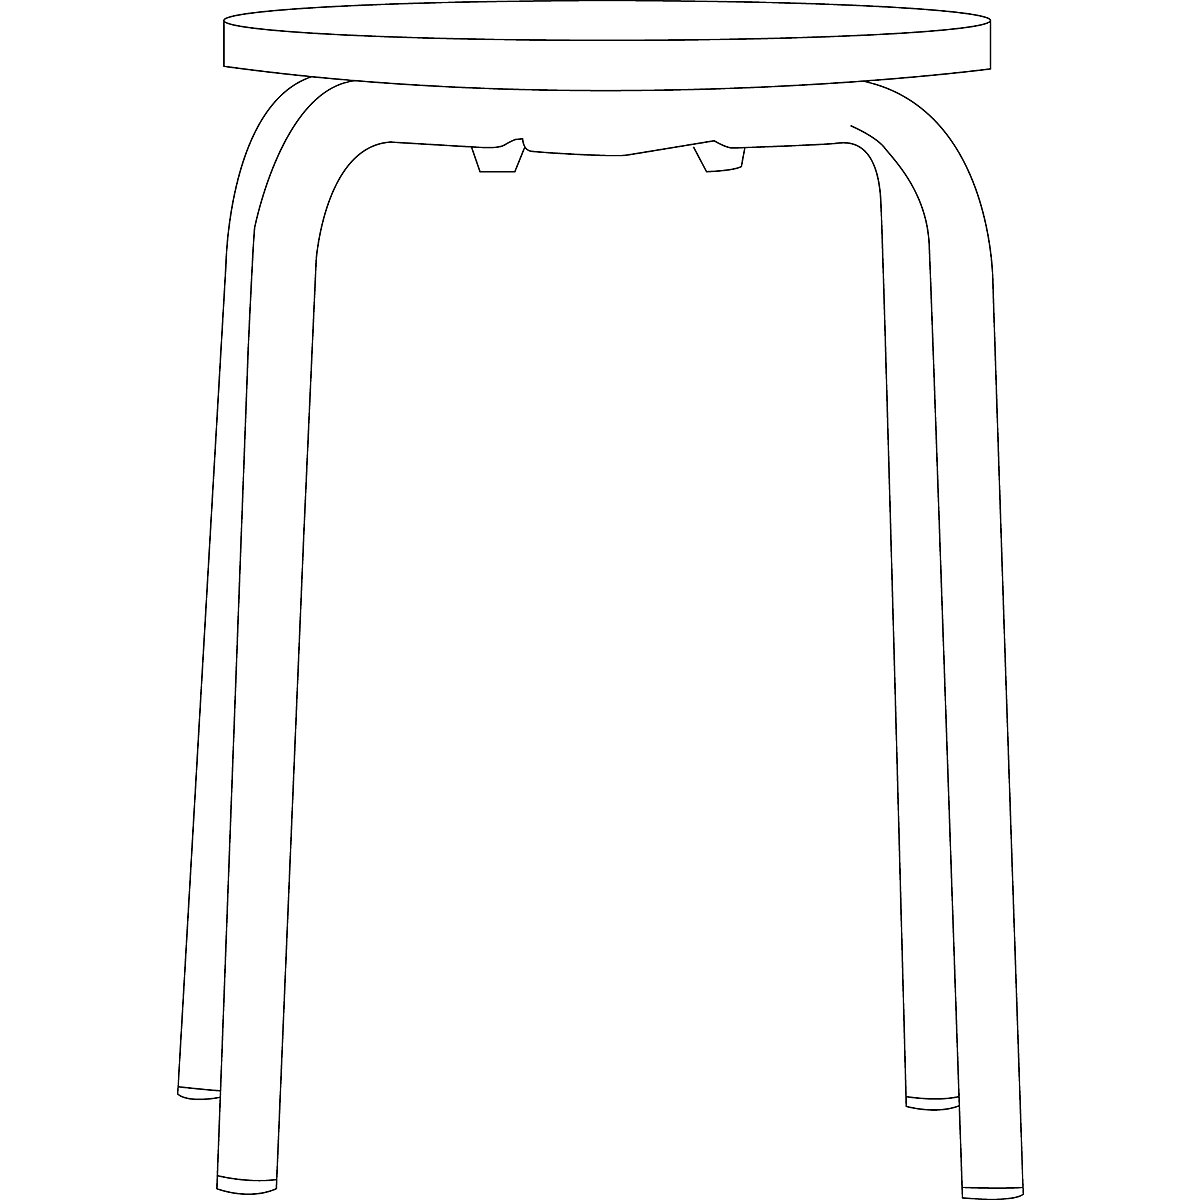 PARIS stool (Product illustration 17)-16